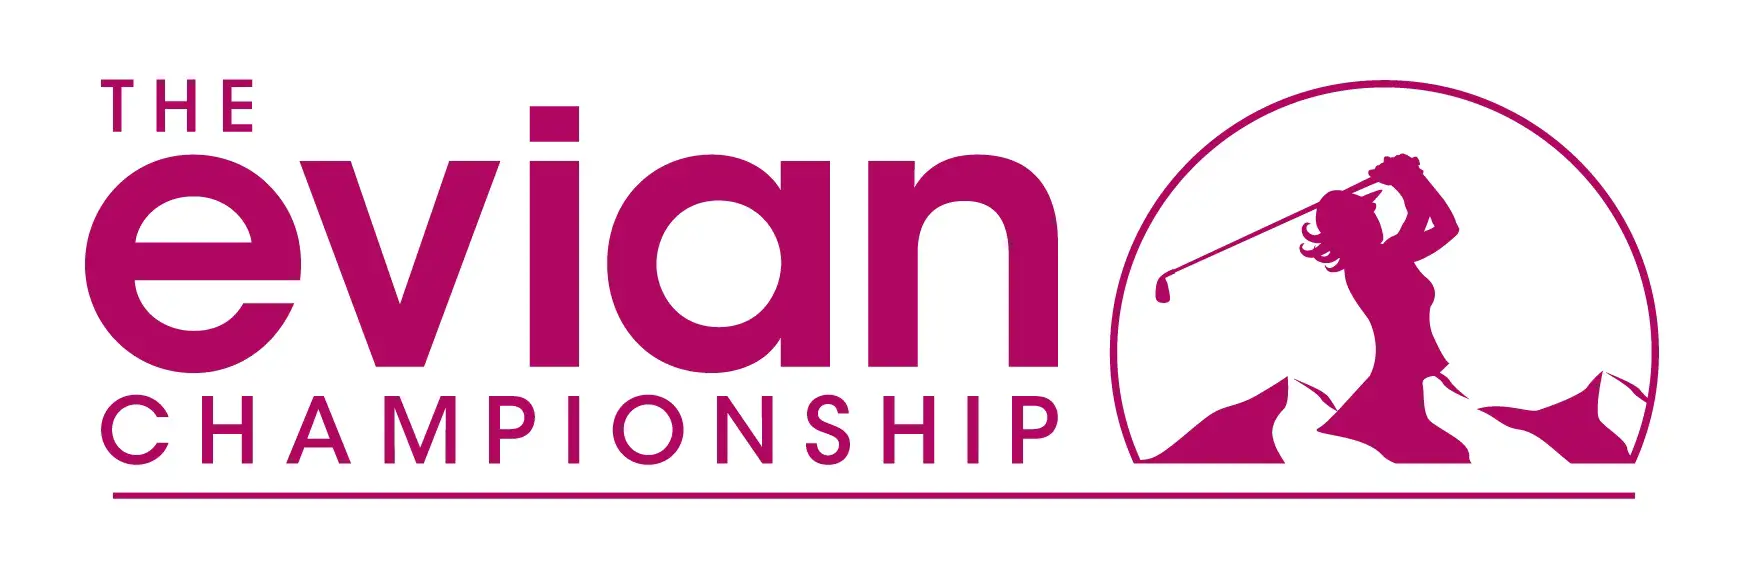 The Evian Championship Logo